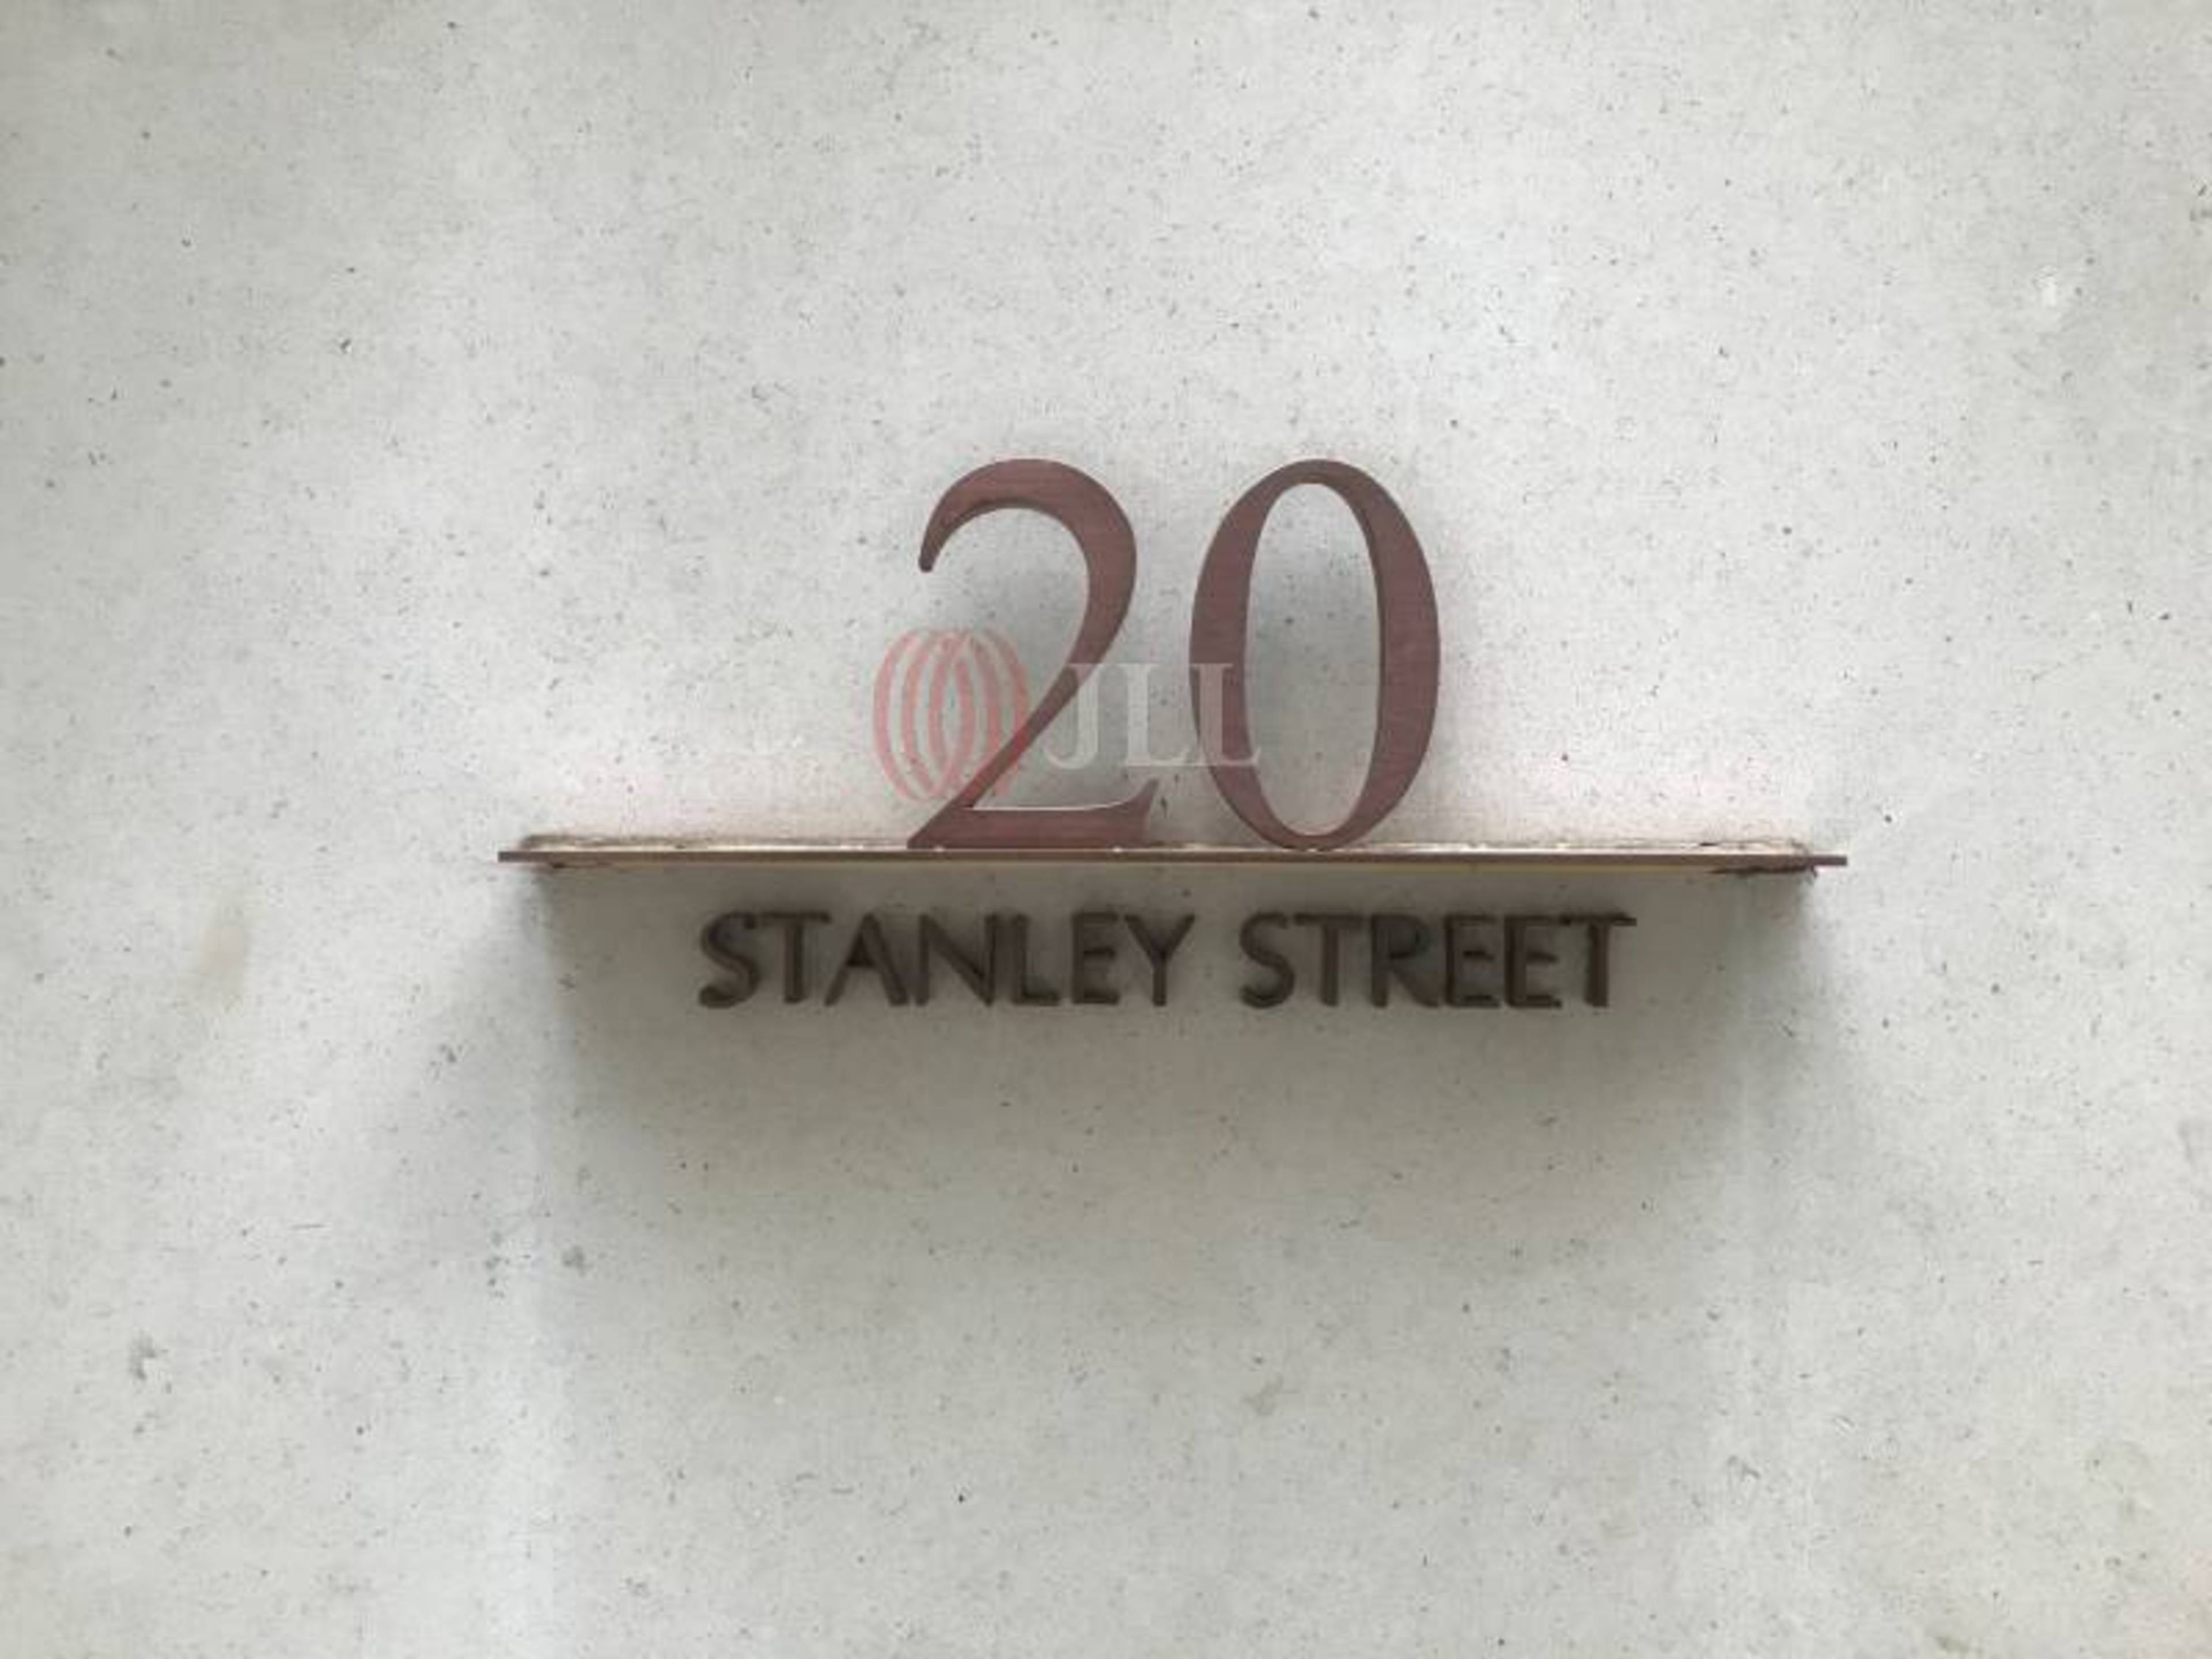 20 Stanley Street